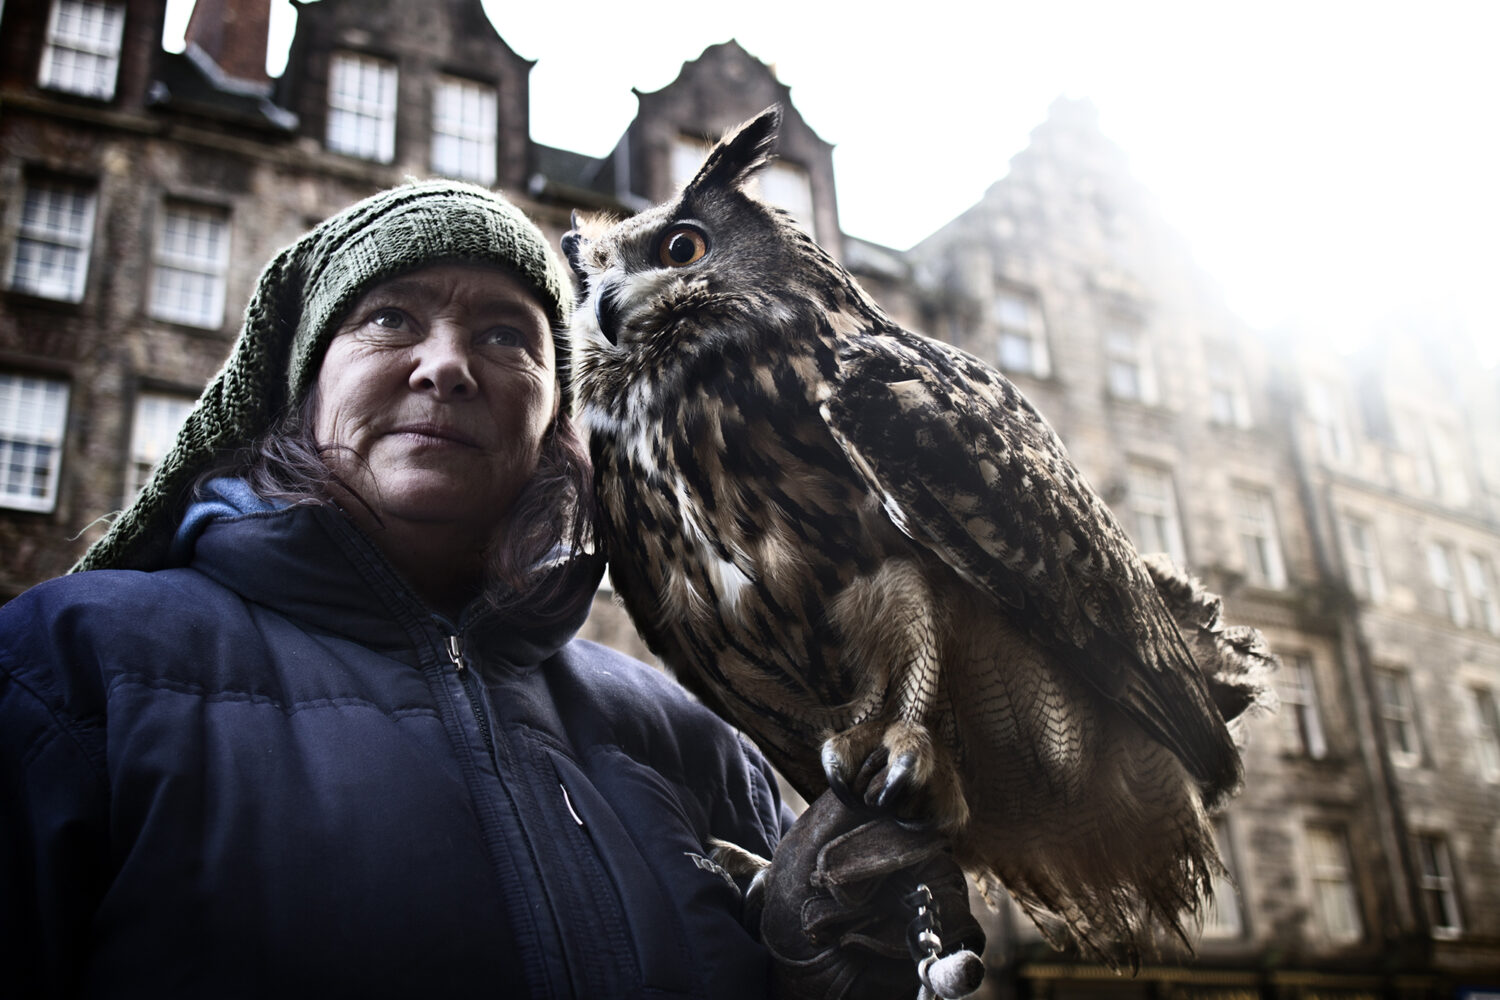 Faces of Edinburgh | Manel Quiros Photography